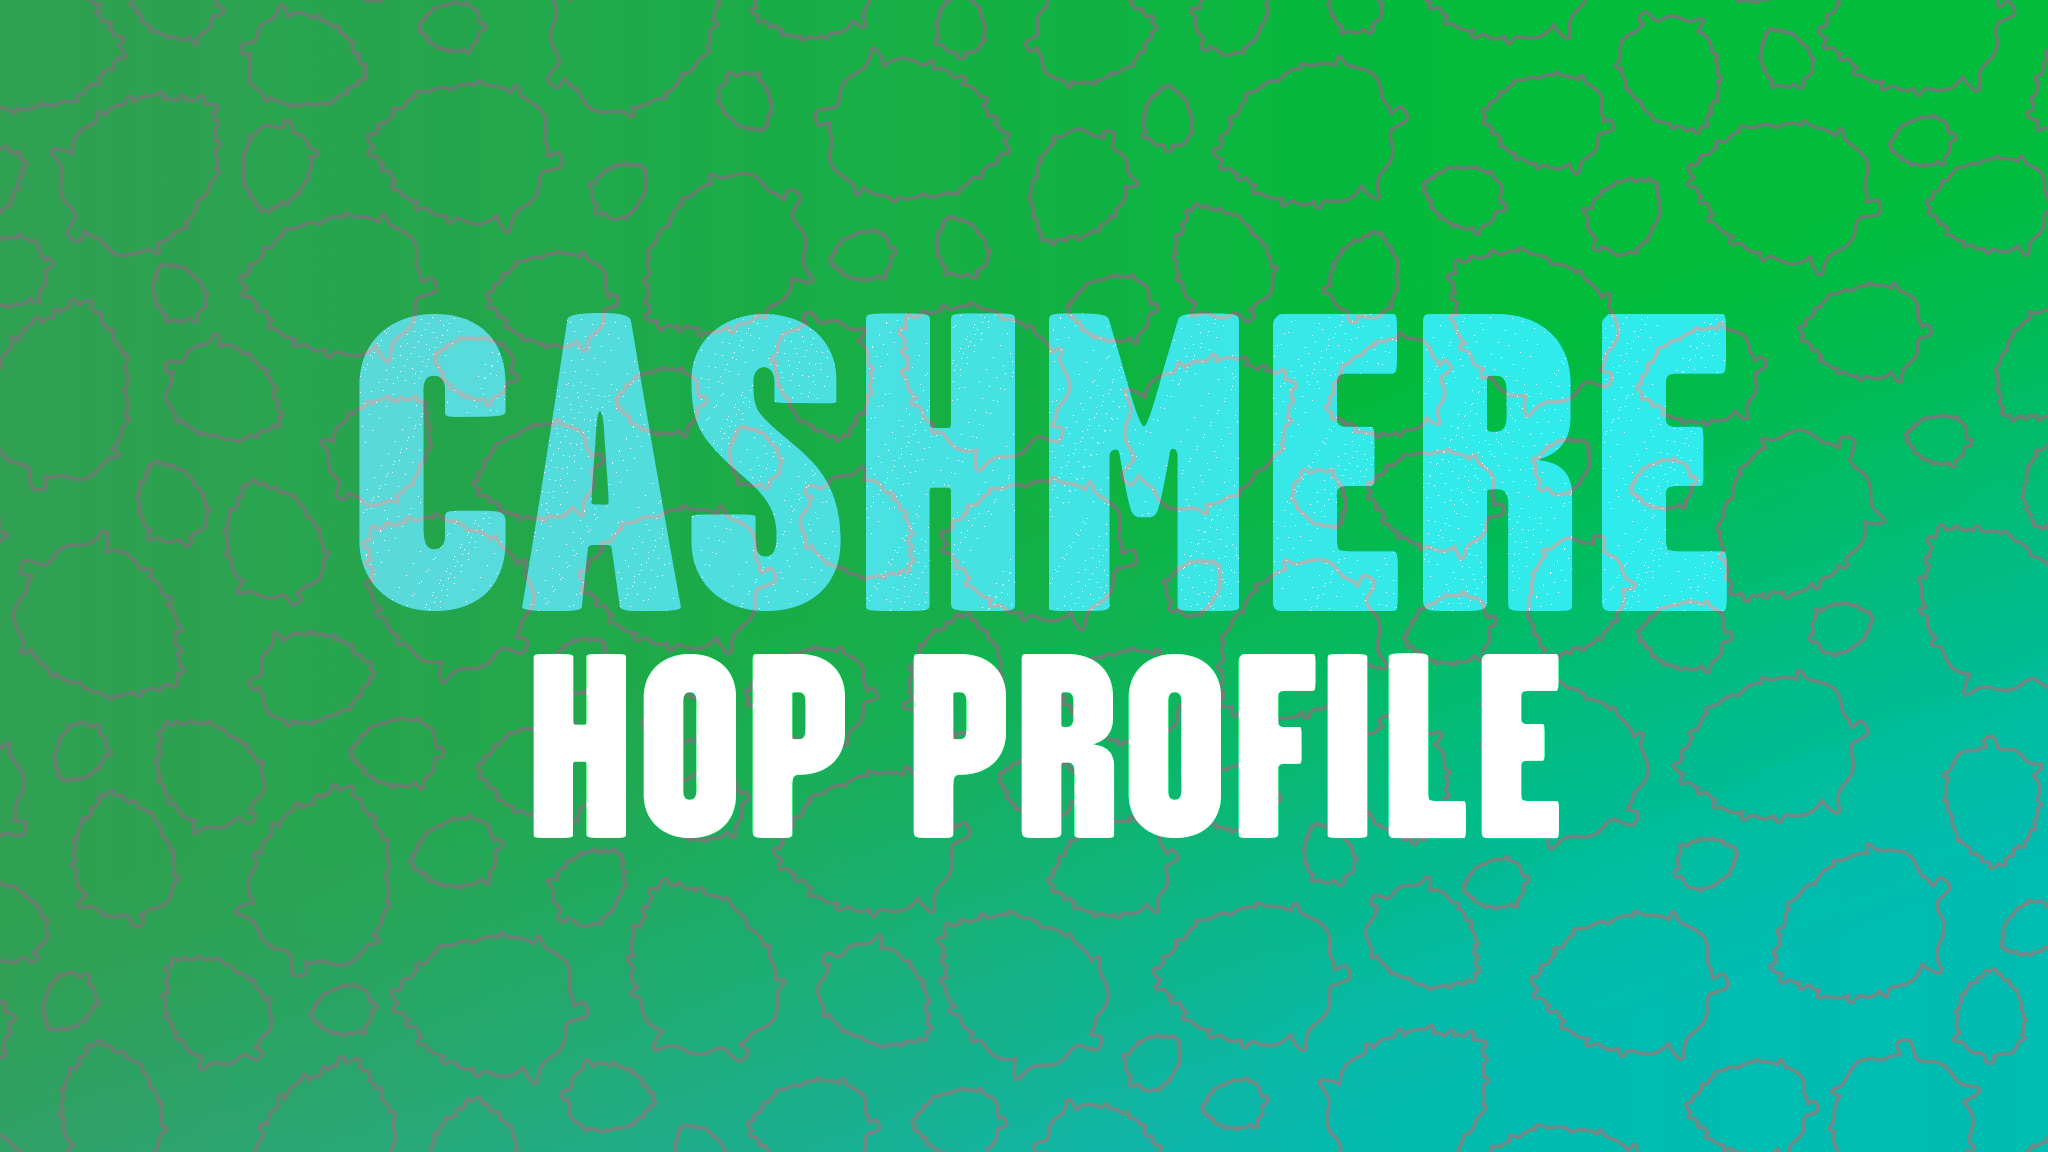 Hop Profile: Cashmere